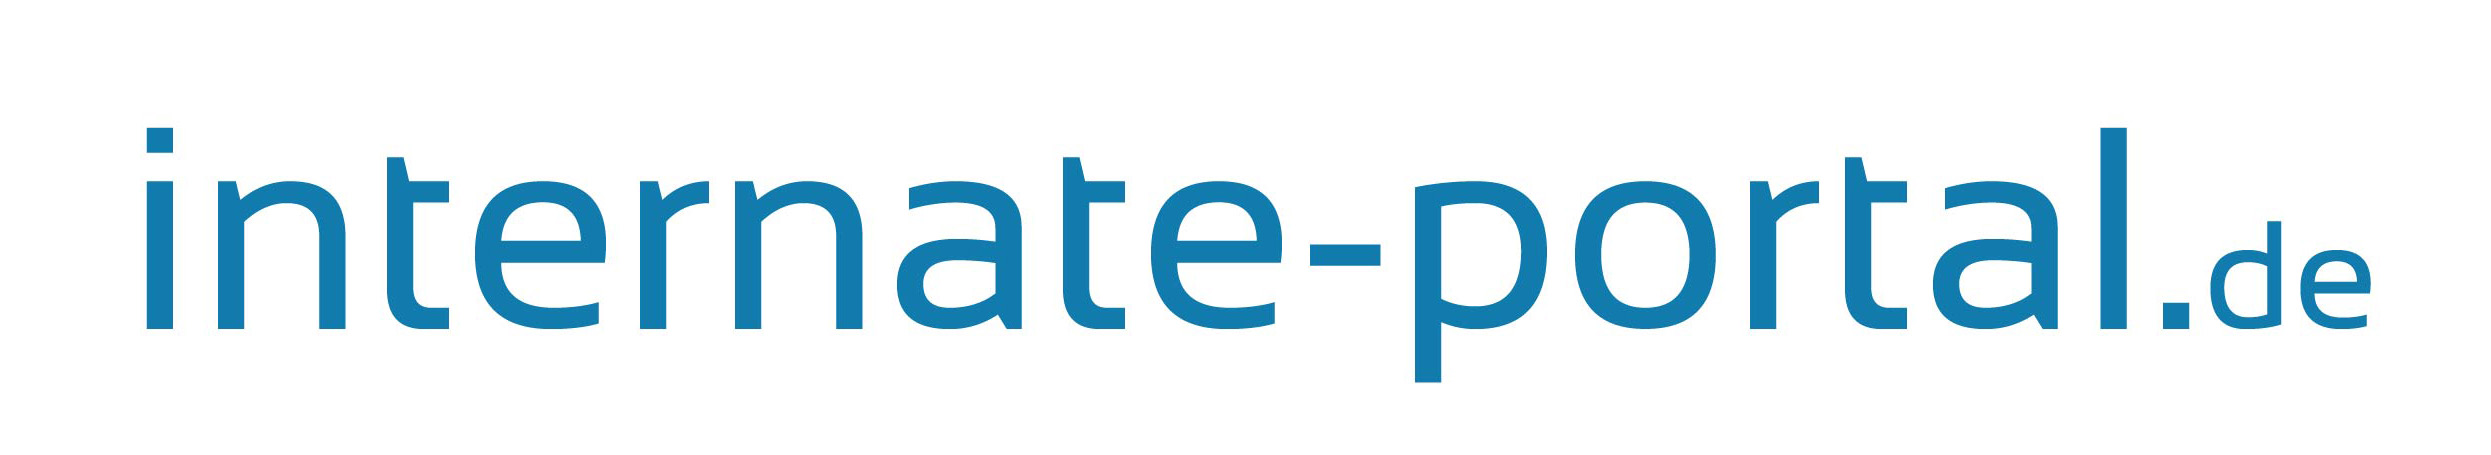 internate portal logo